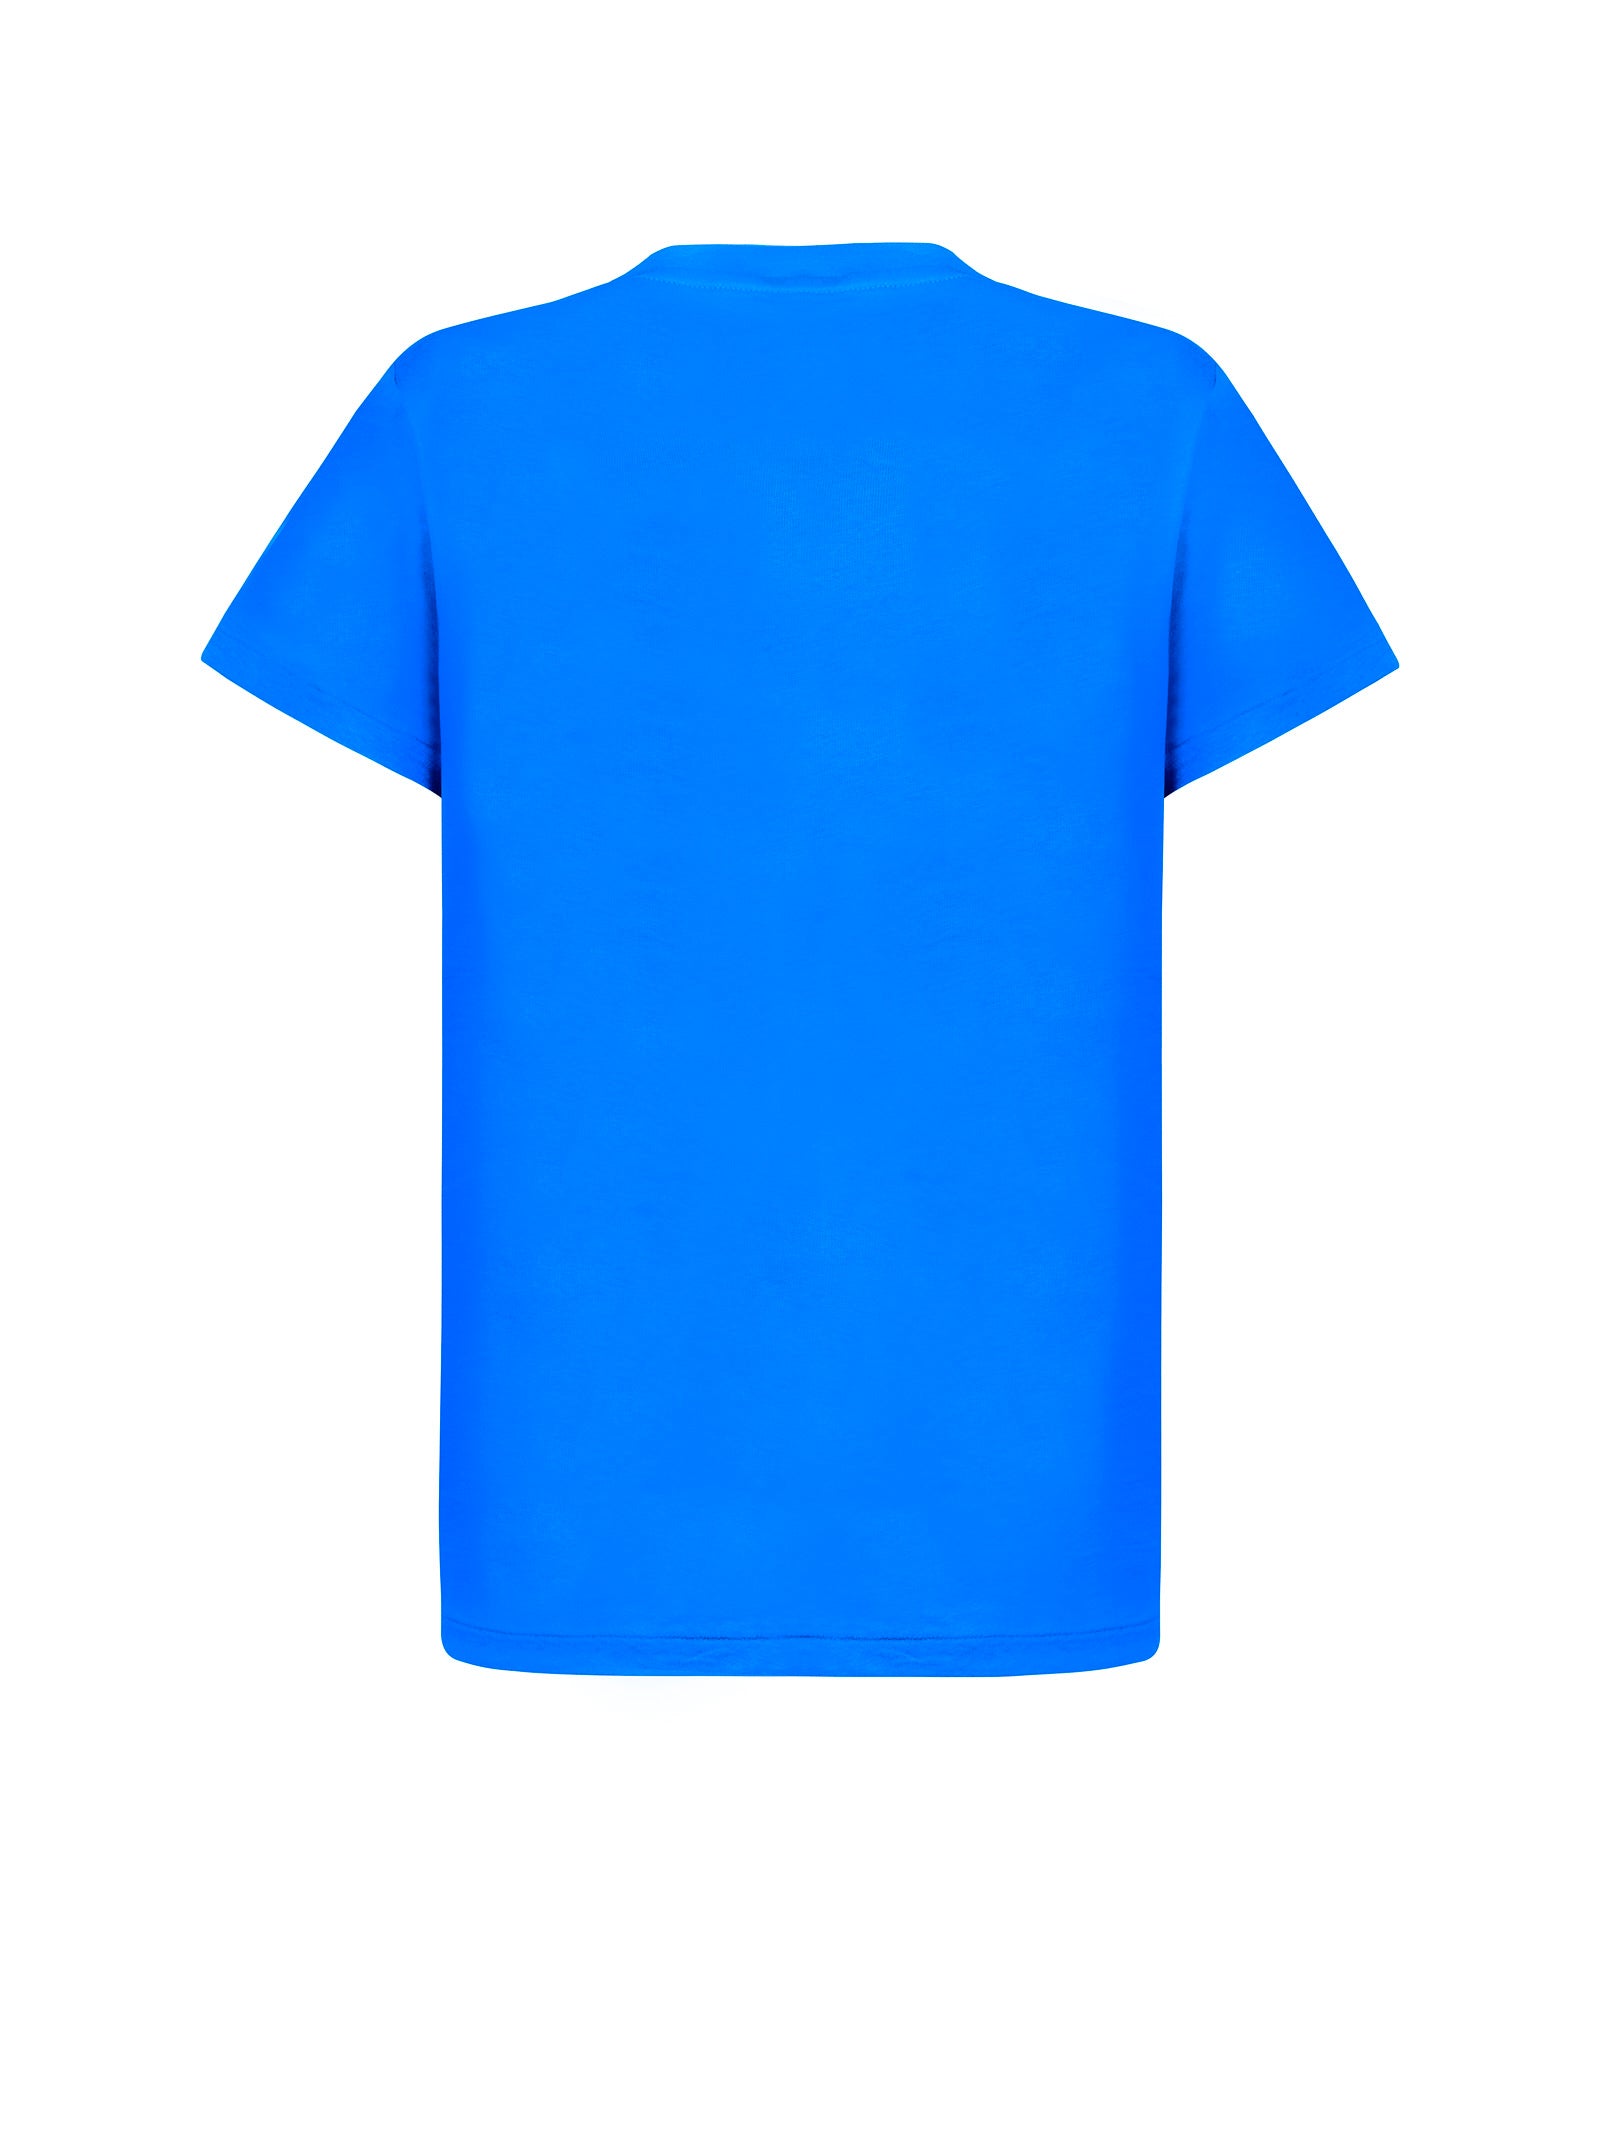 T-shirt POLO RALPH LAUREN
Heritage blu